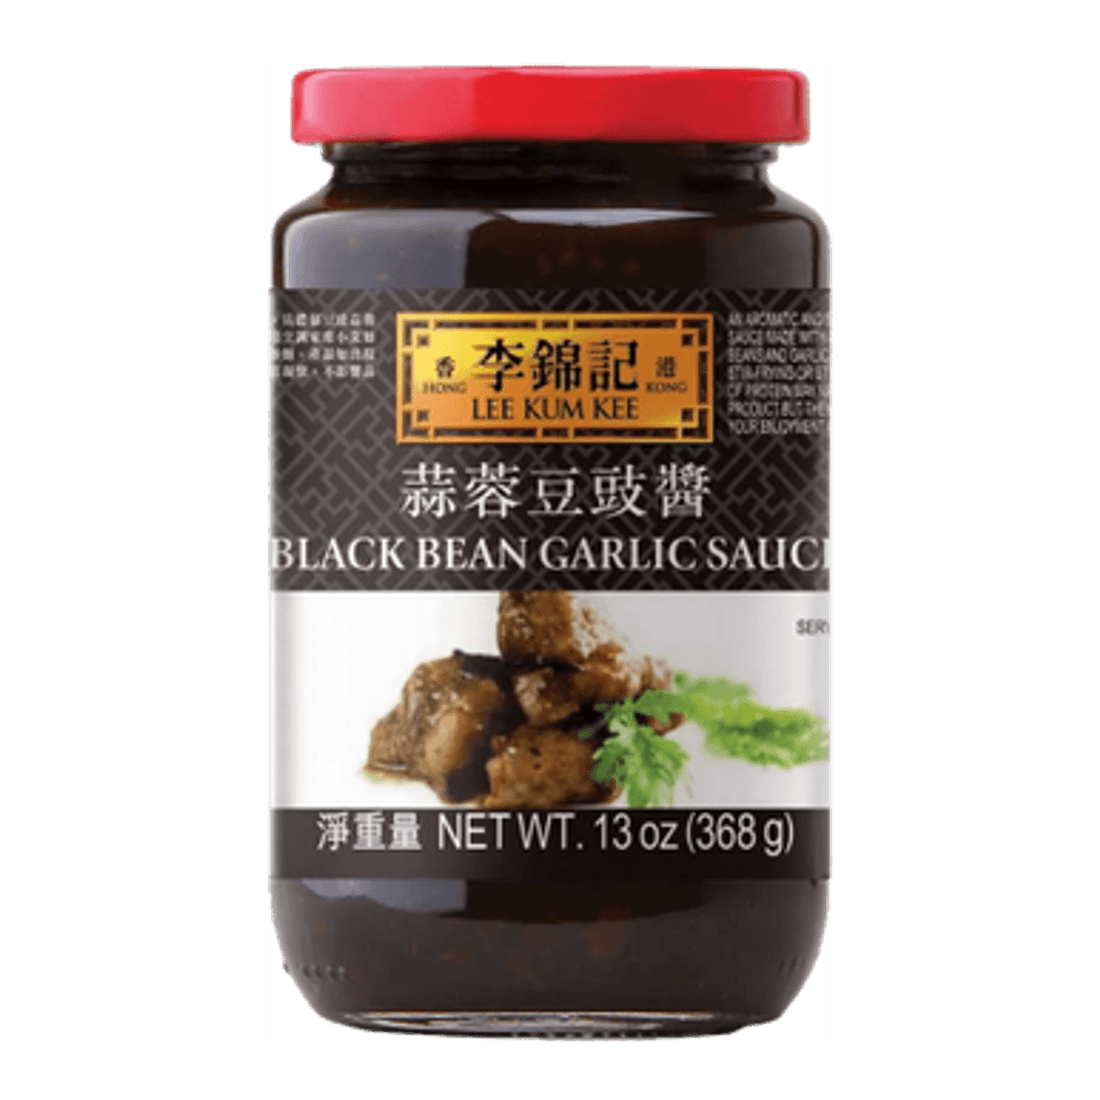 Lee Kum Kee Black Bean Garlic Sauce 13oz(368g) - Anytime Basket